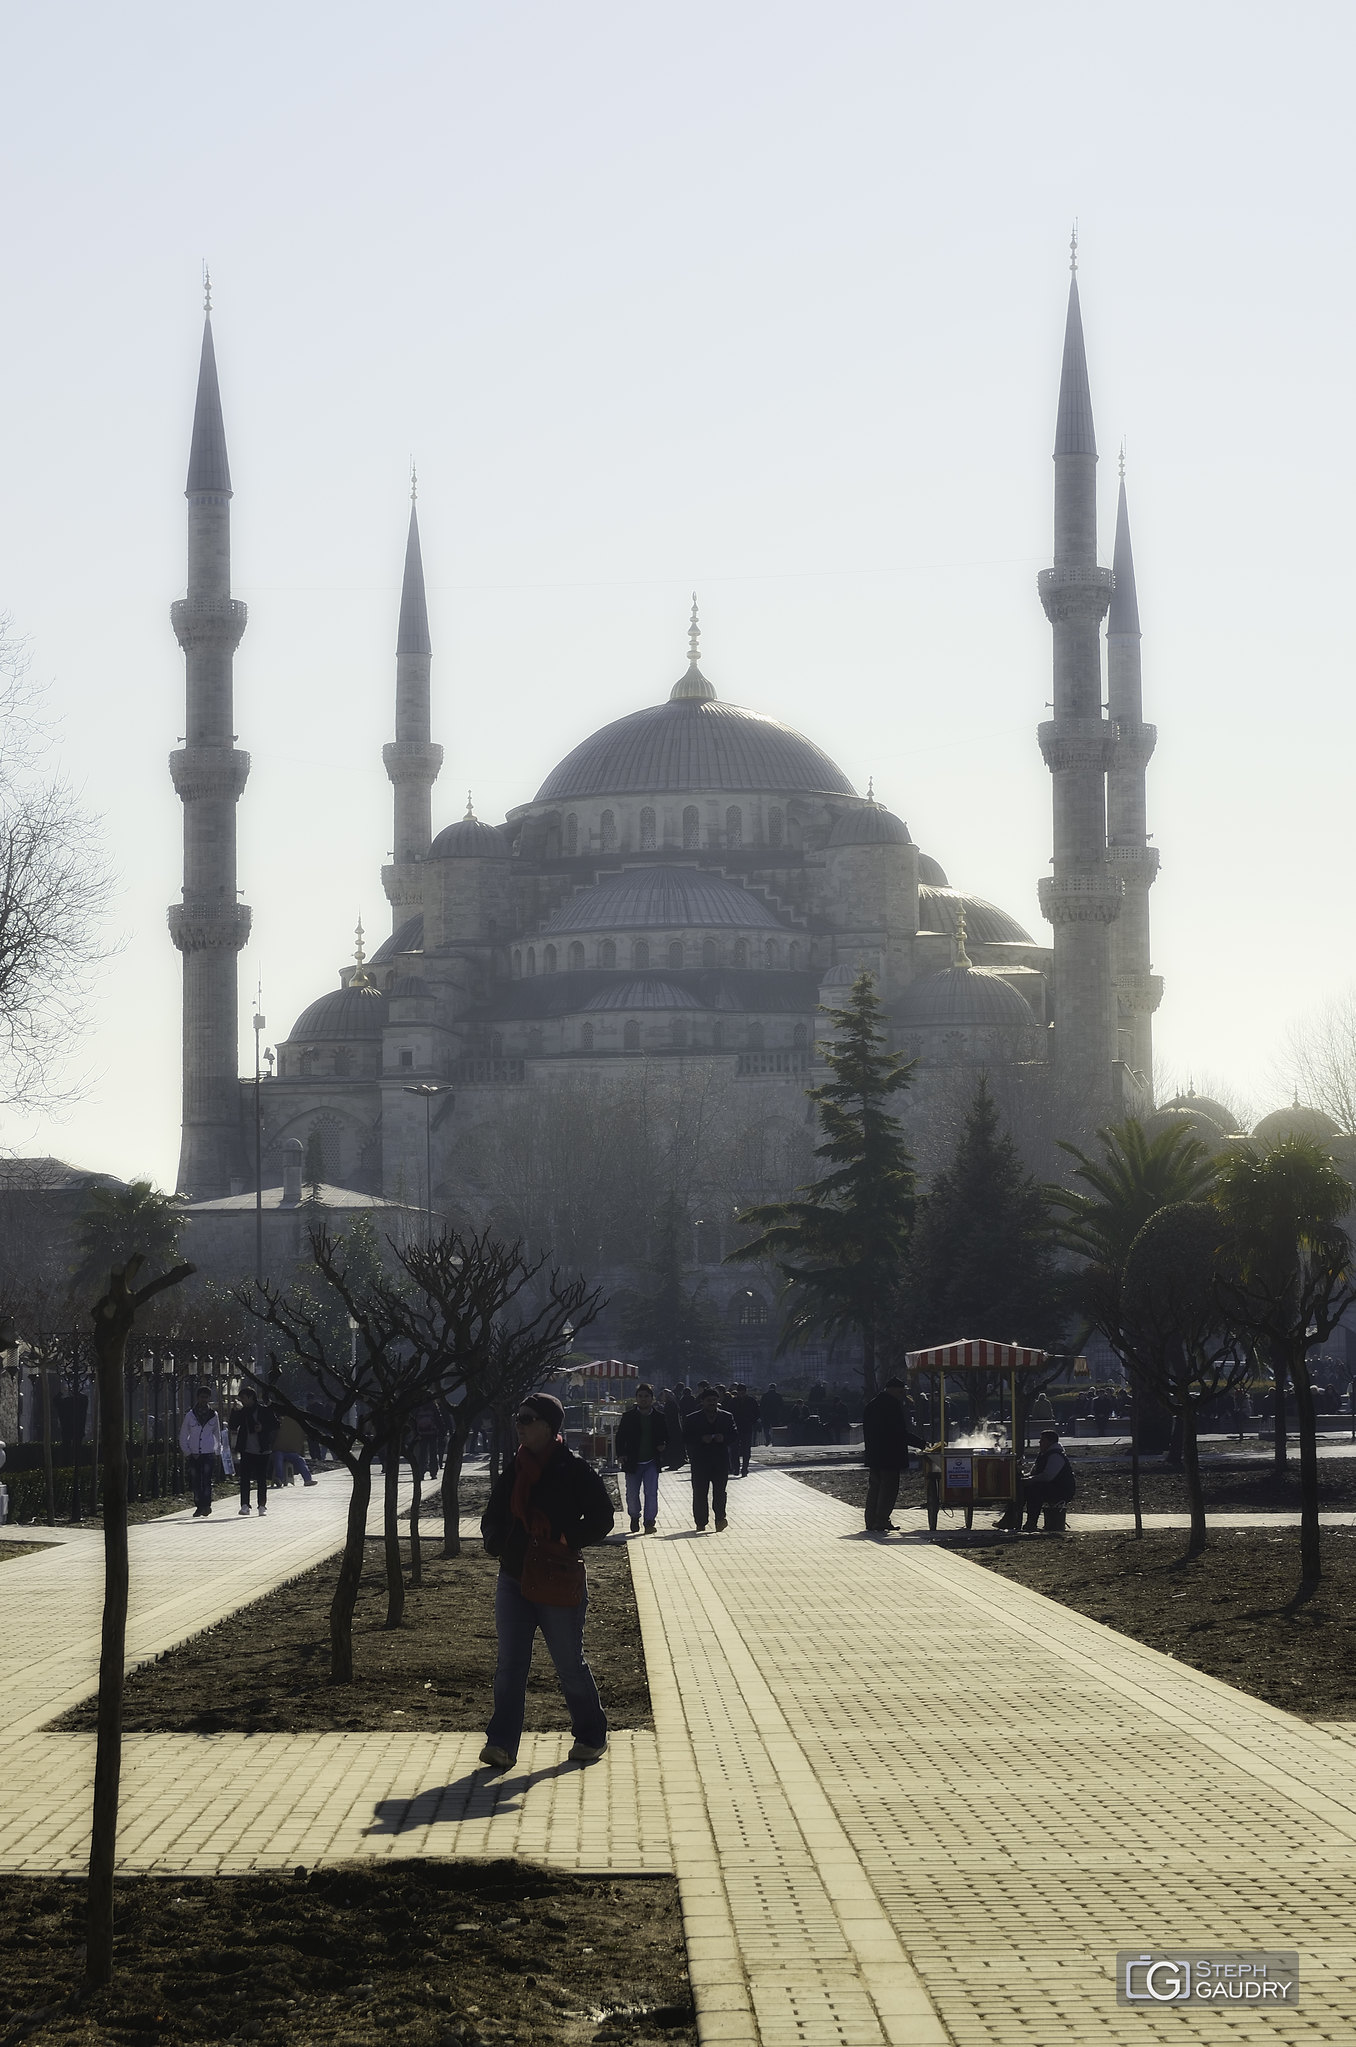 La mosquée bleue de Constantinople (Istanbul) [Click to start slideshow]